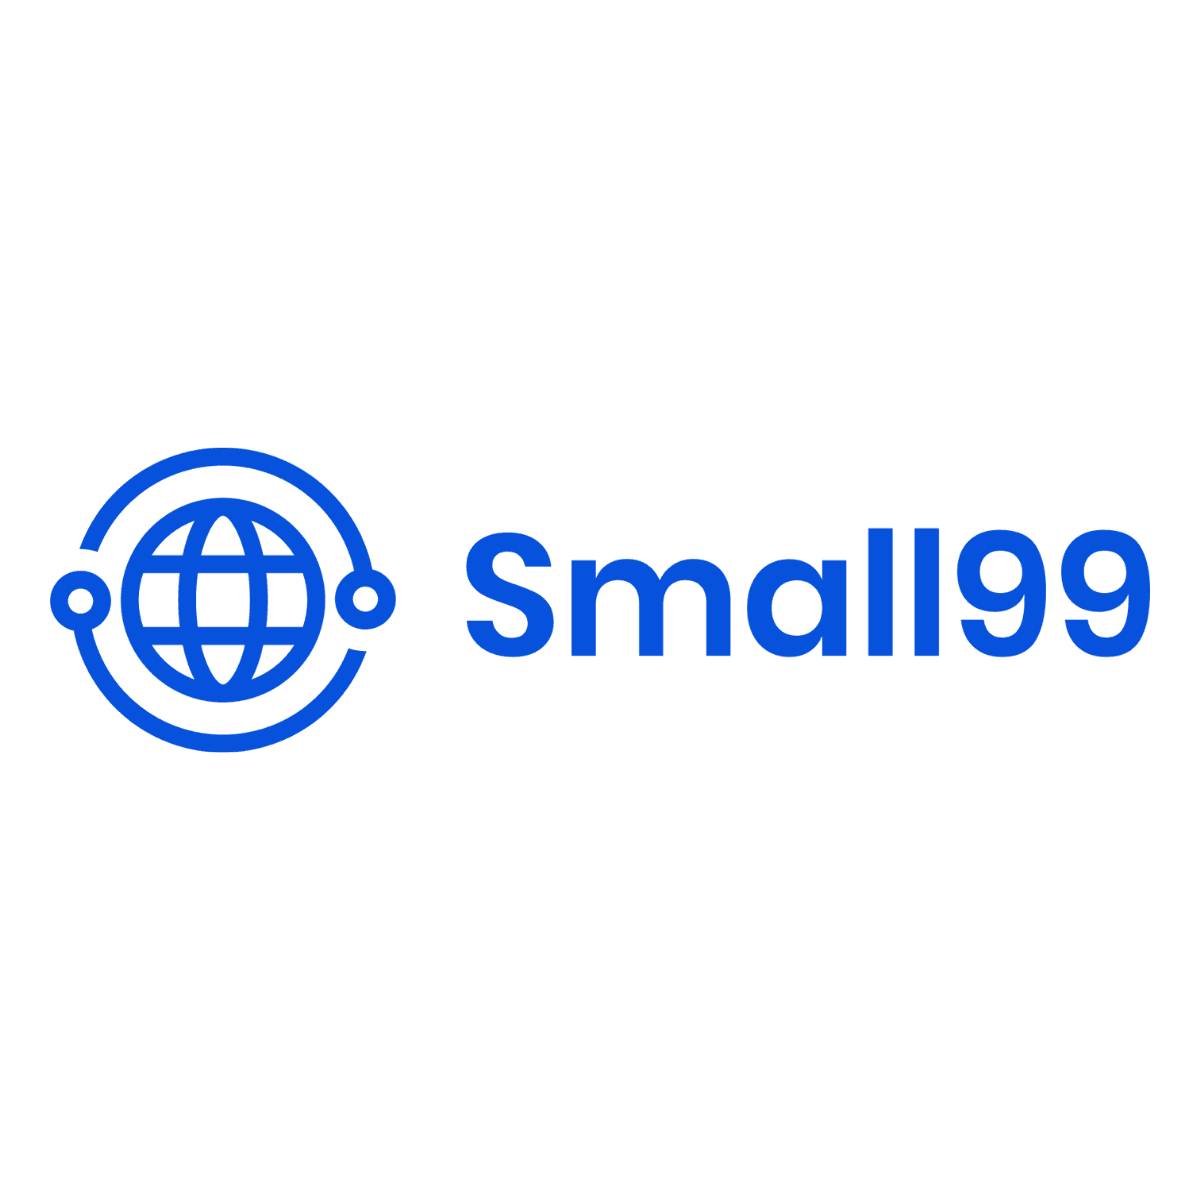 Small99